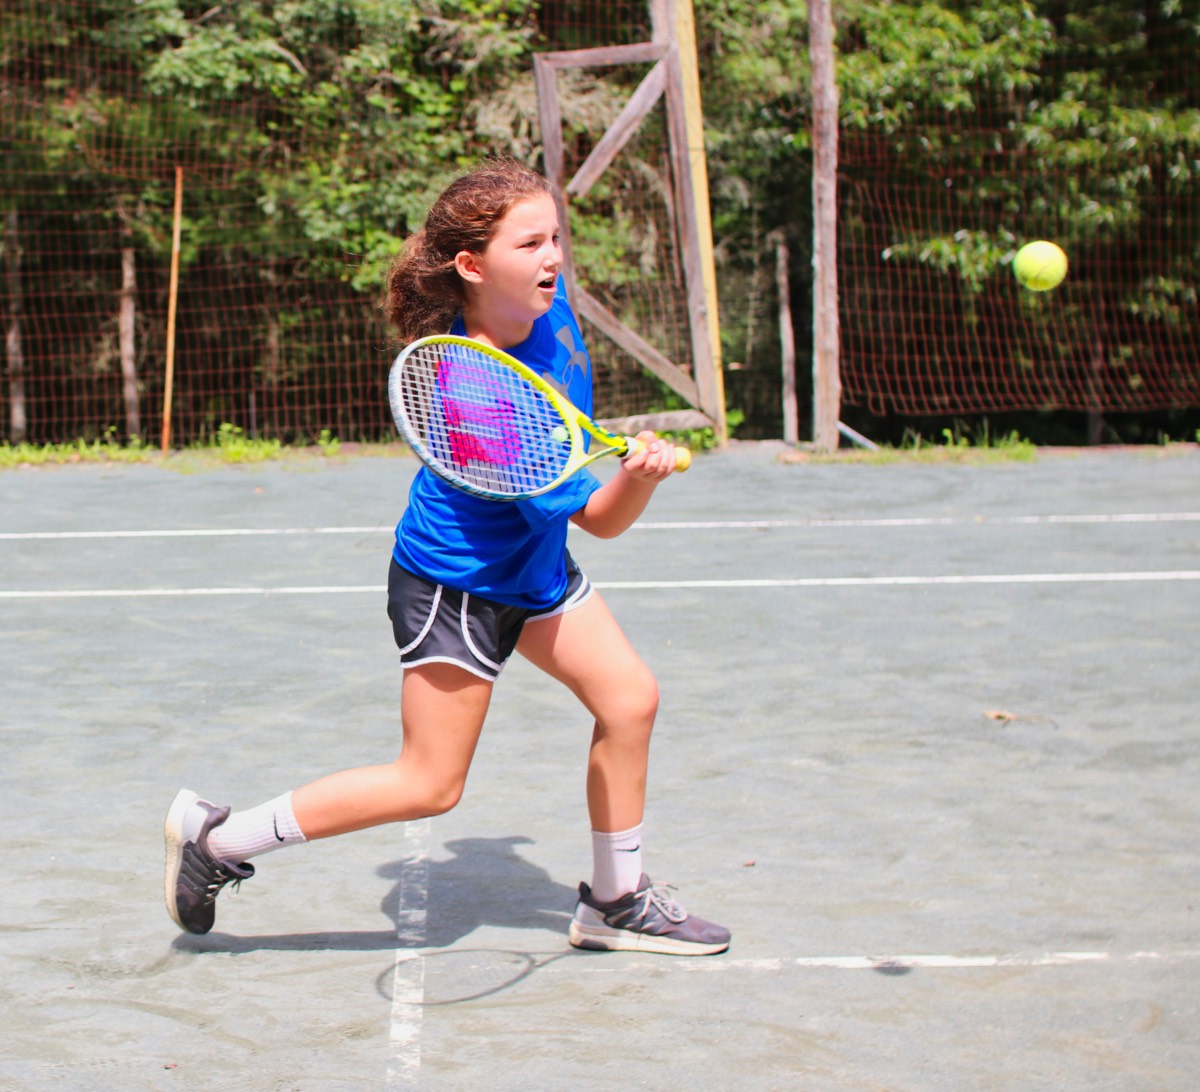 tennis camp girl